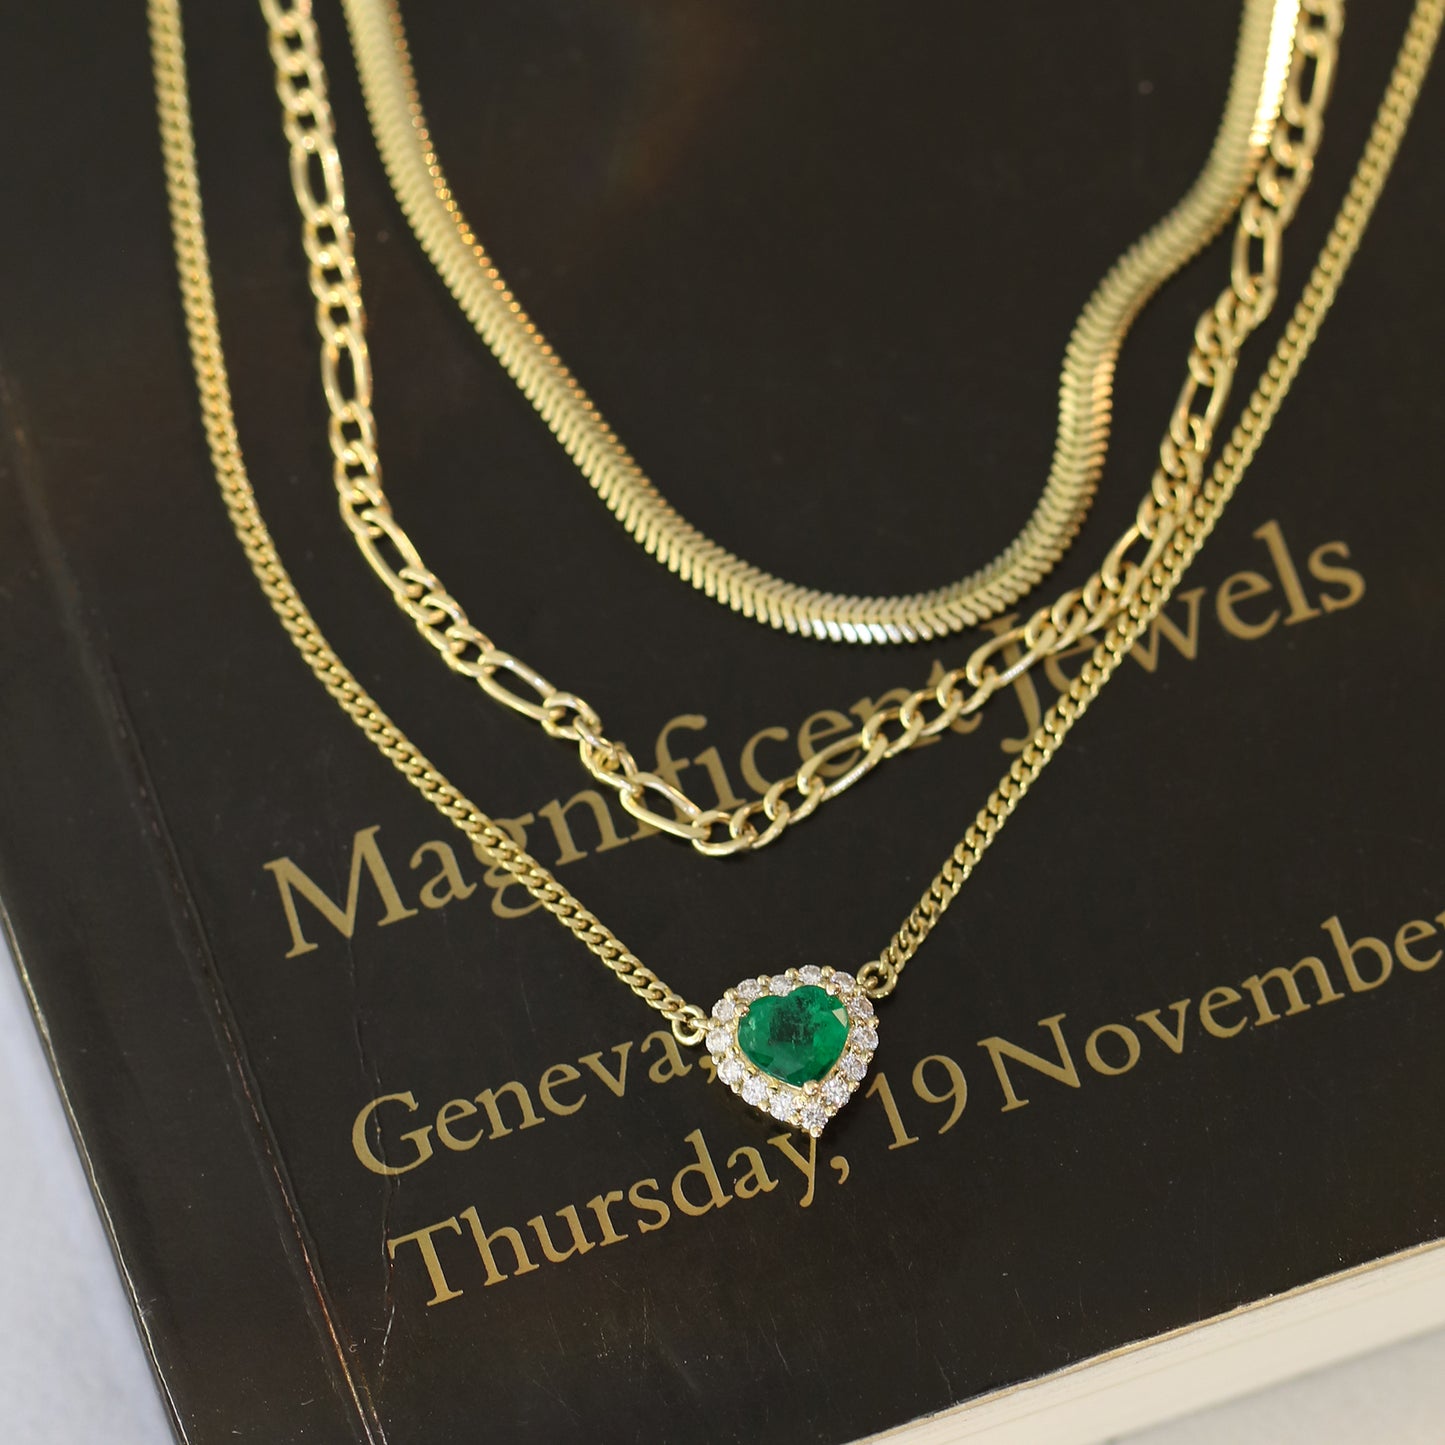 18k黃金心形綠寶石鑽石頸鍊 18k Yellow Gold Heart-shaped Emerald Diamond Halo Cuban Chain Necklace